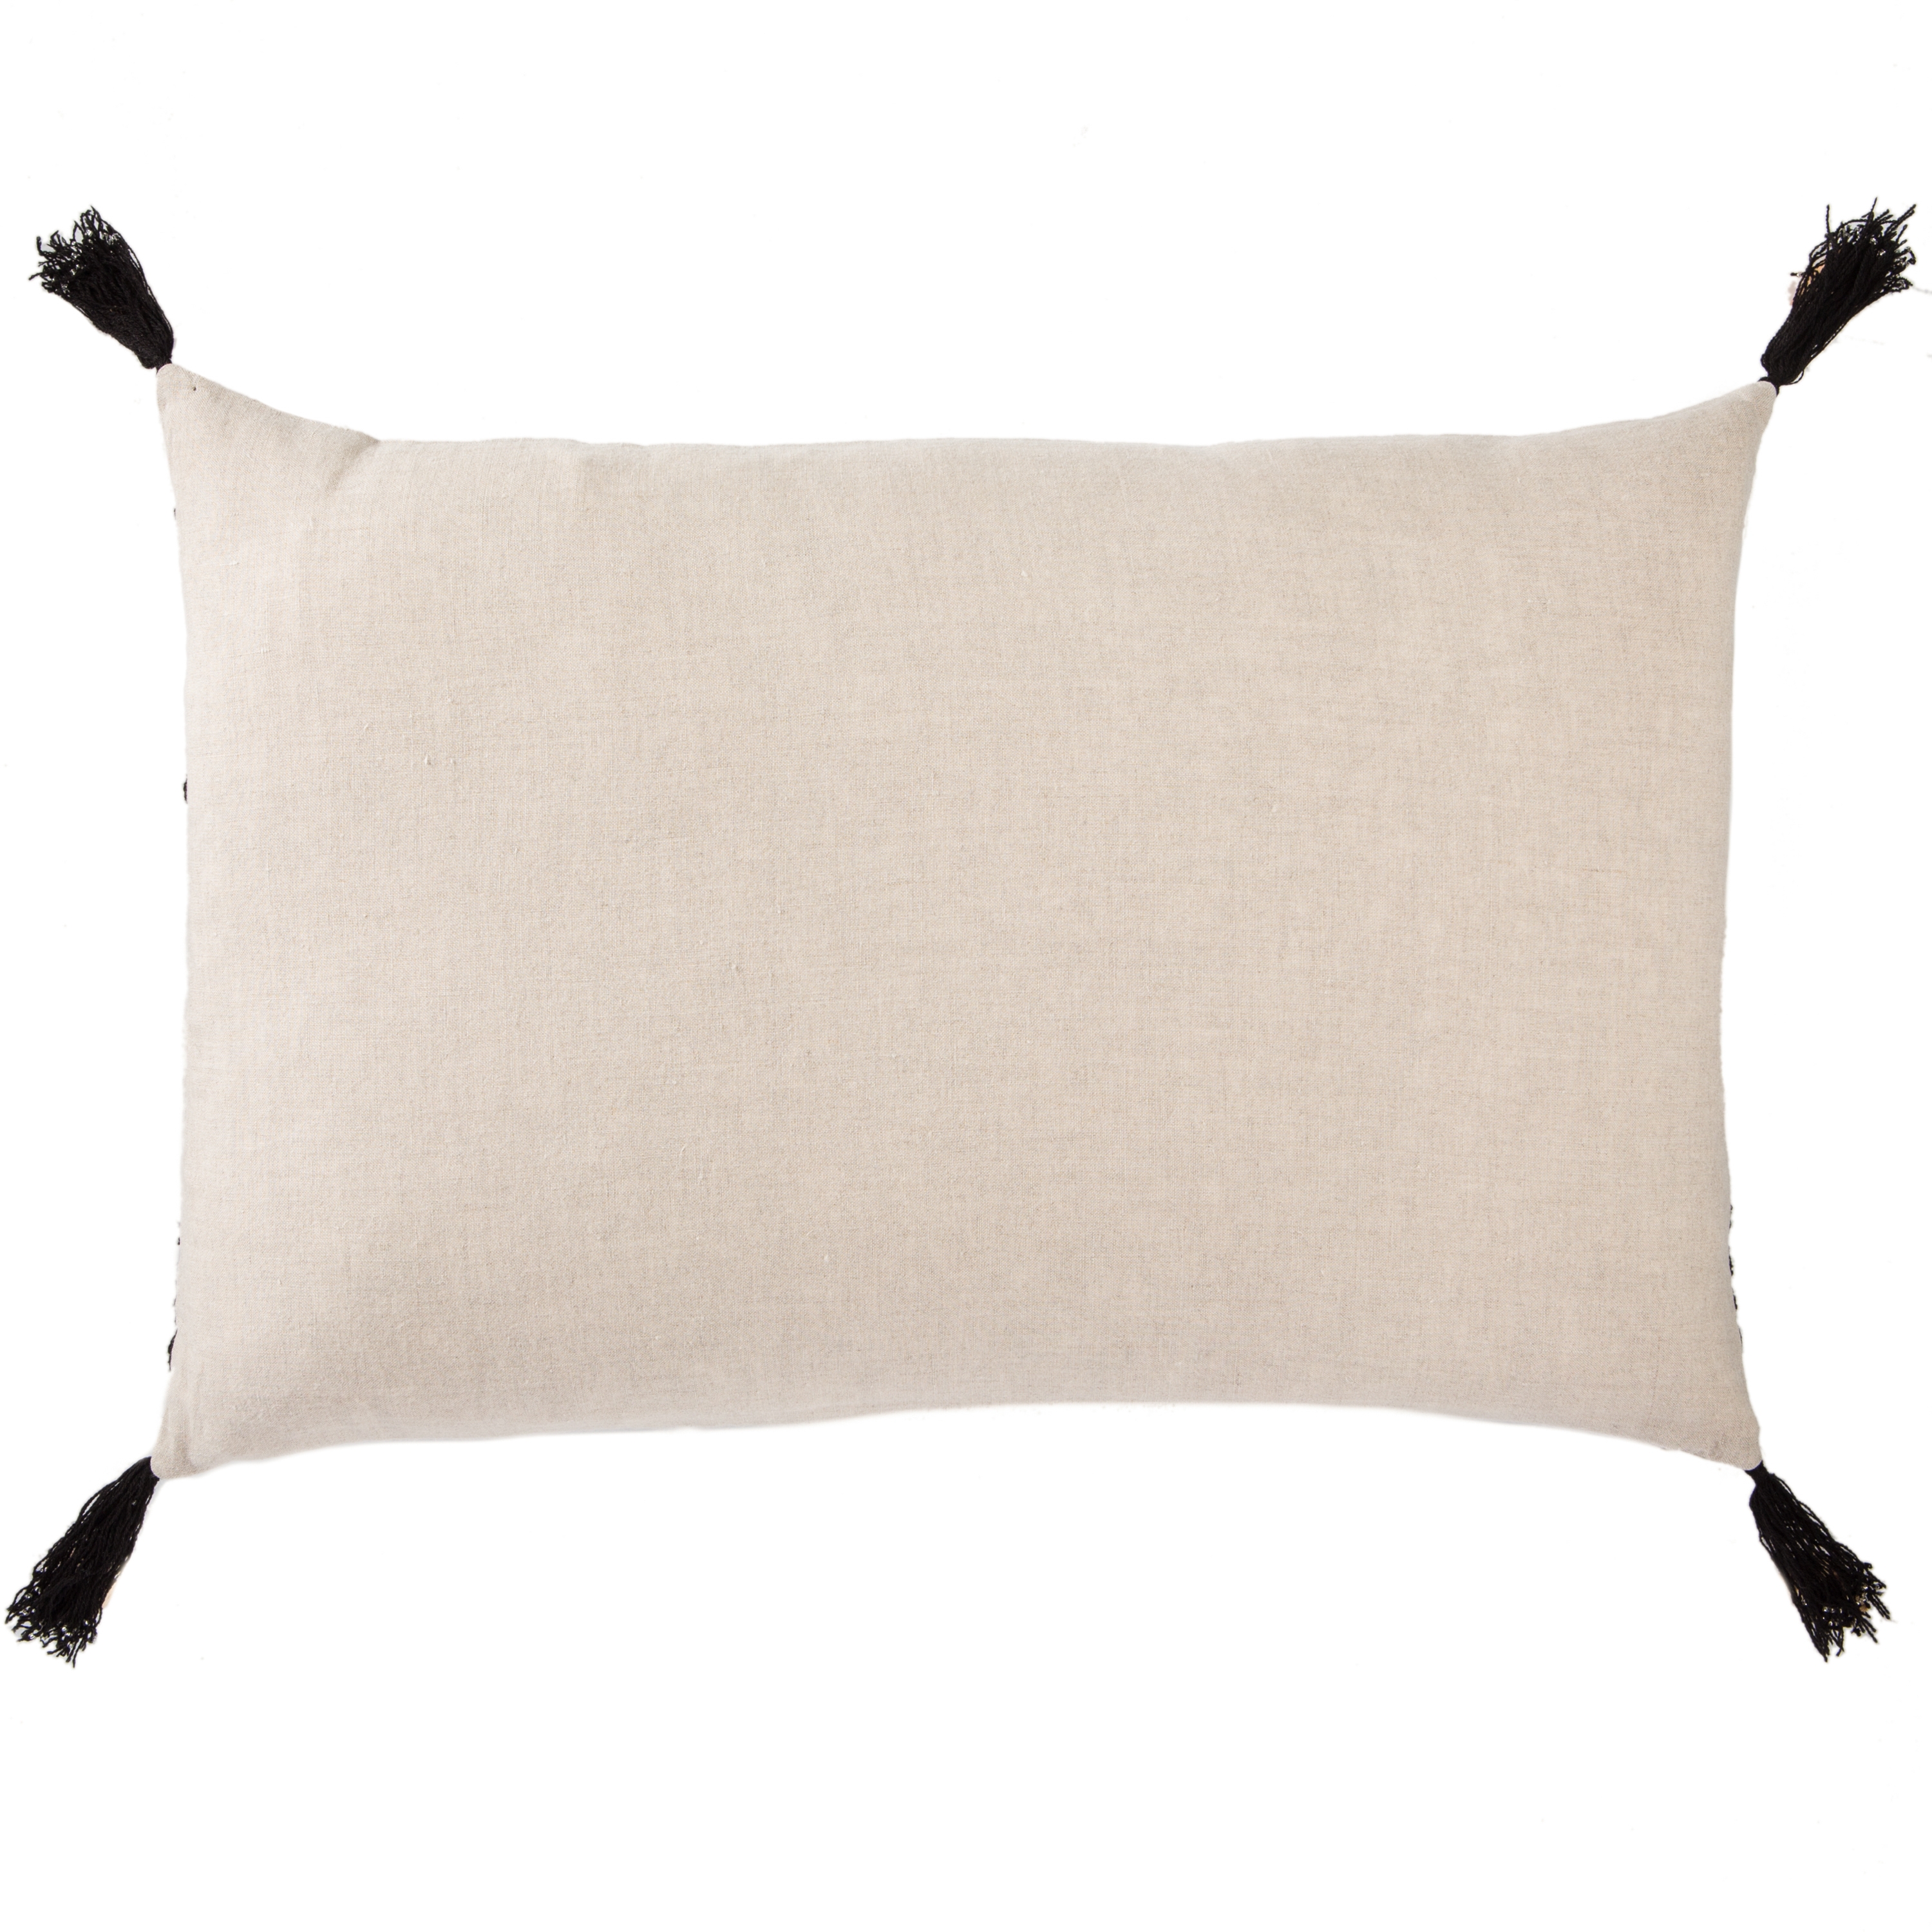 Nki35 16"X24" Pillow, Poly Fill - Image 1